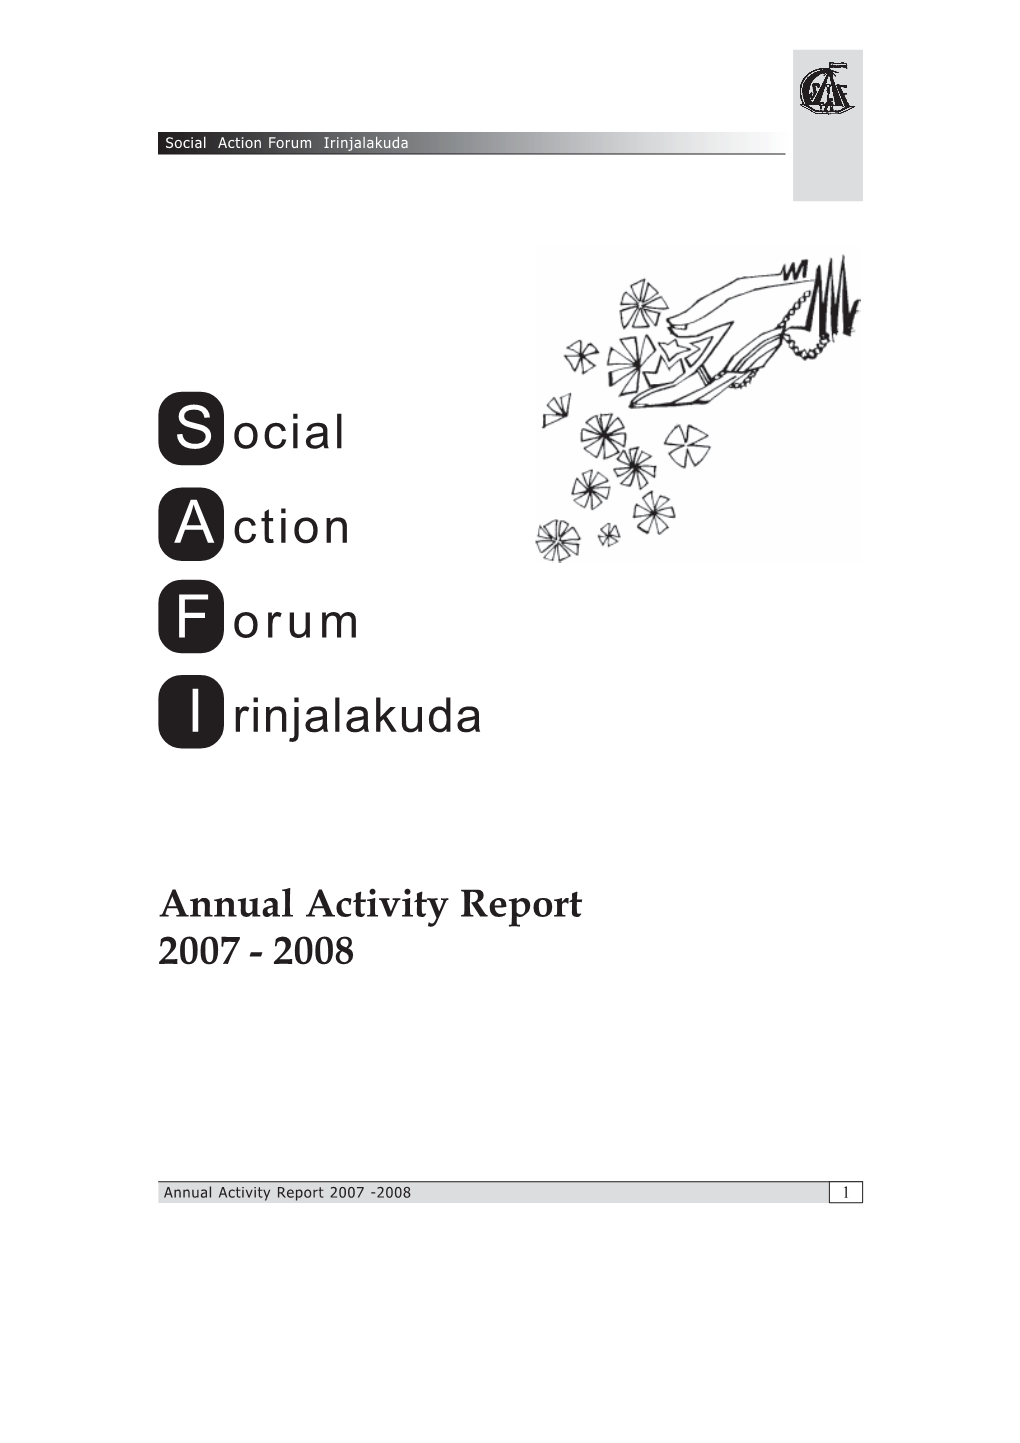 Annual Activity Report 2007 - 2008